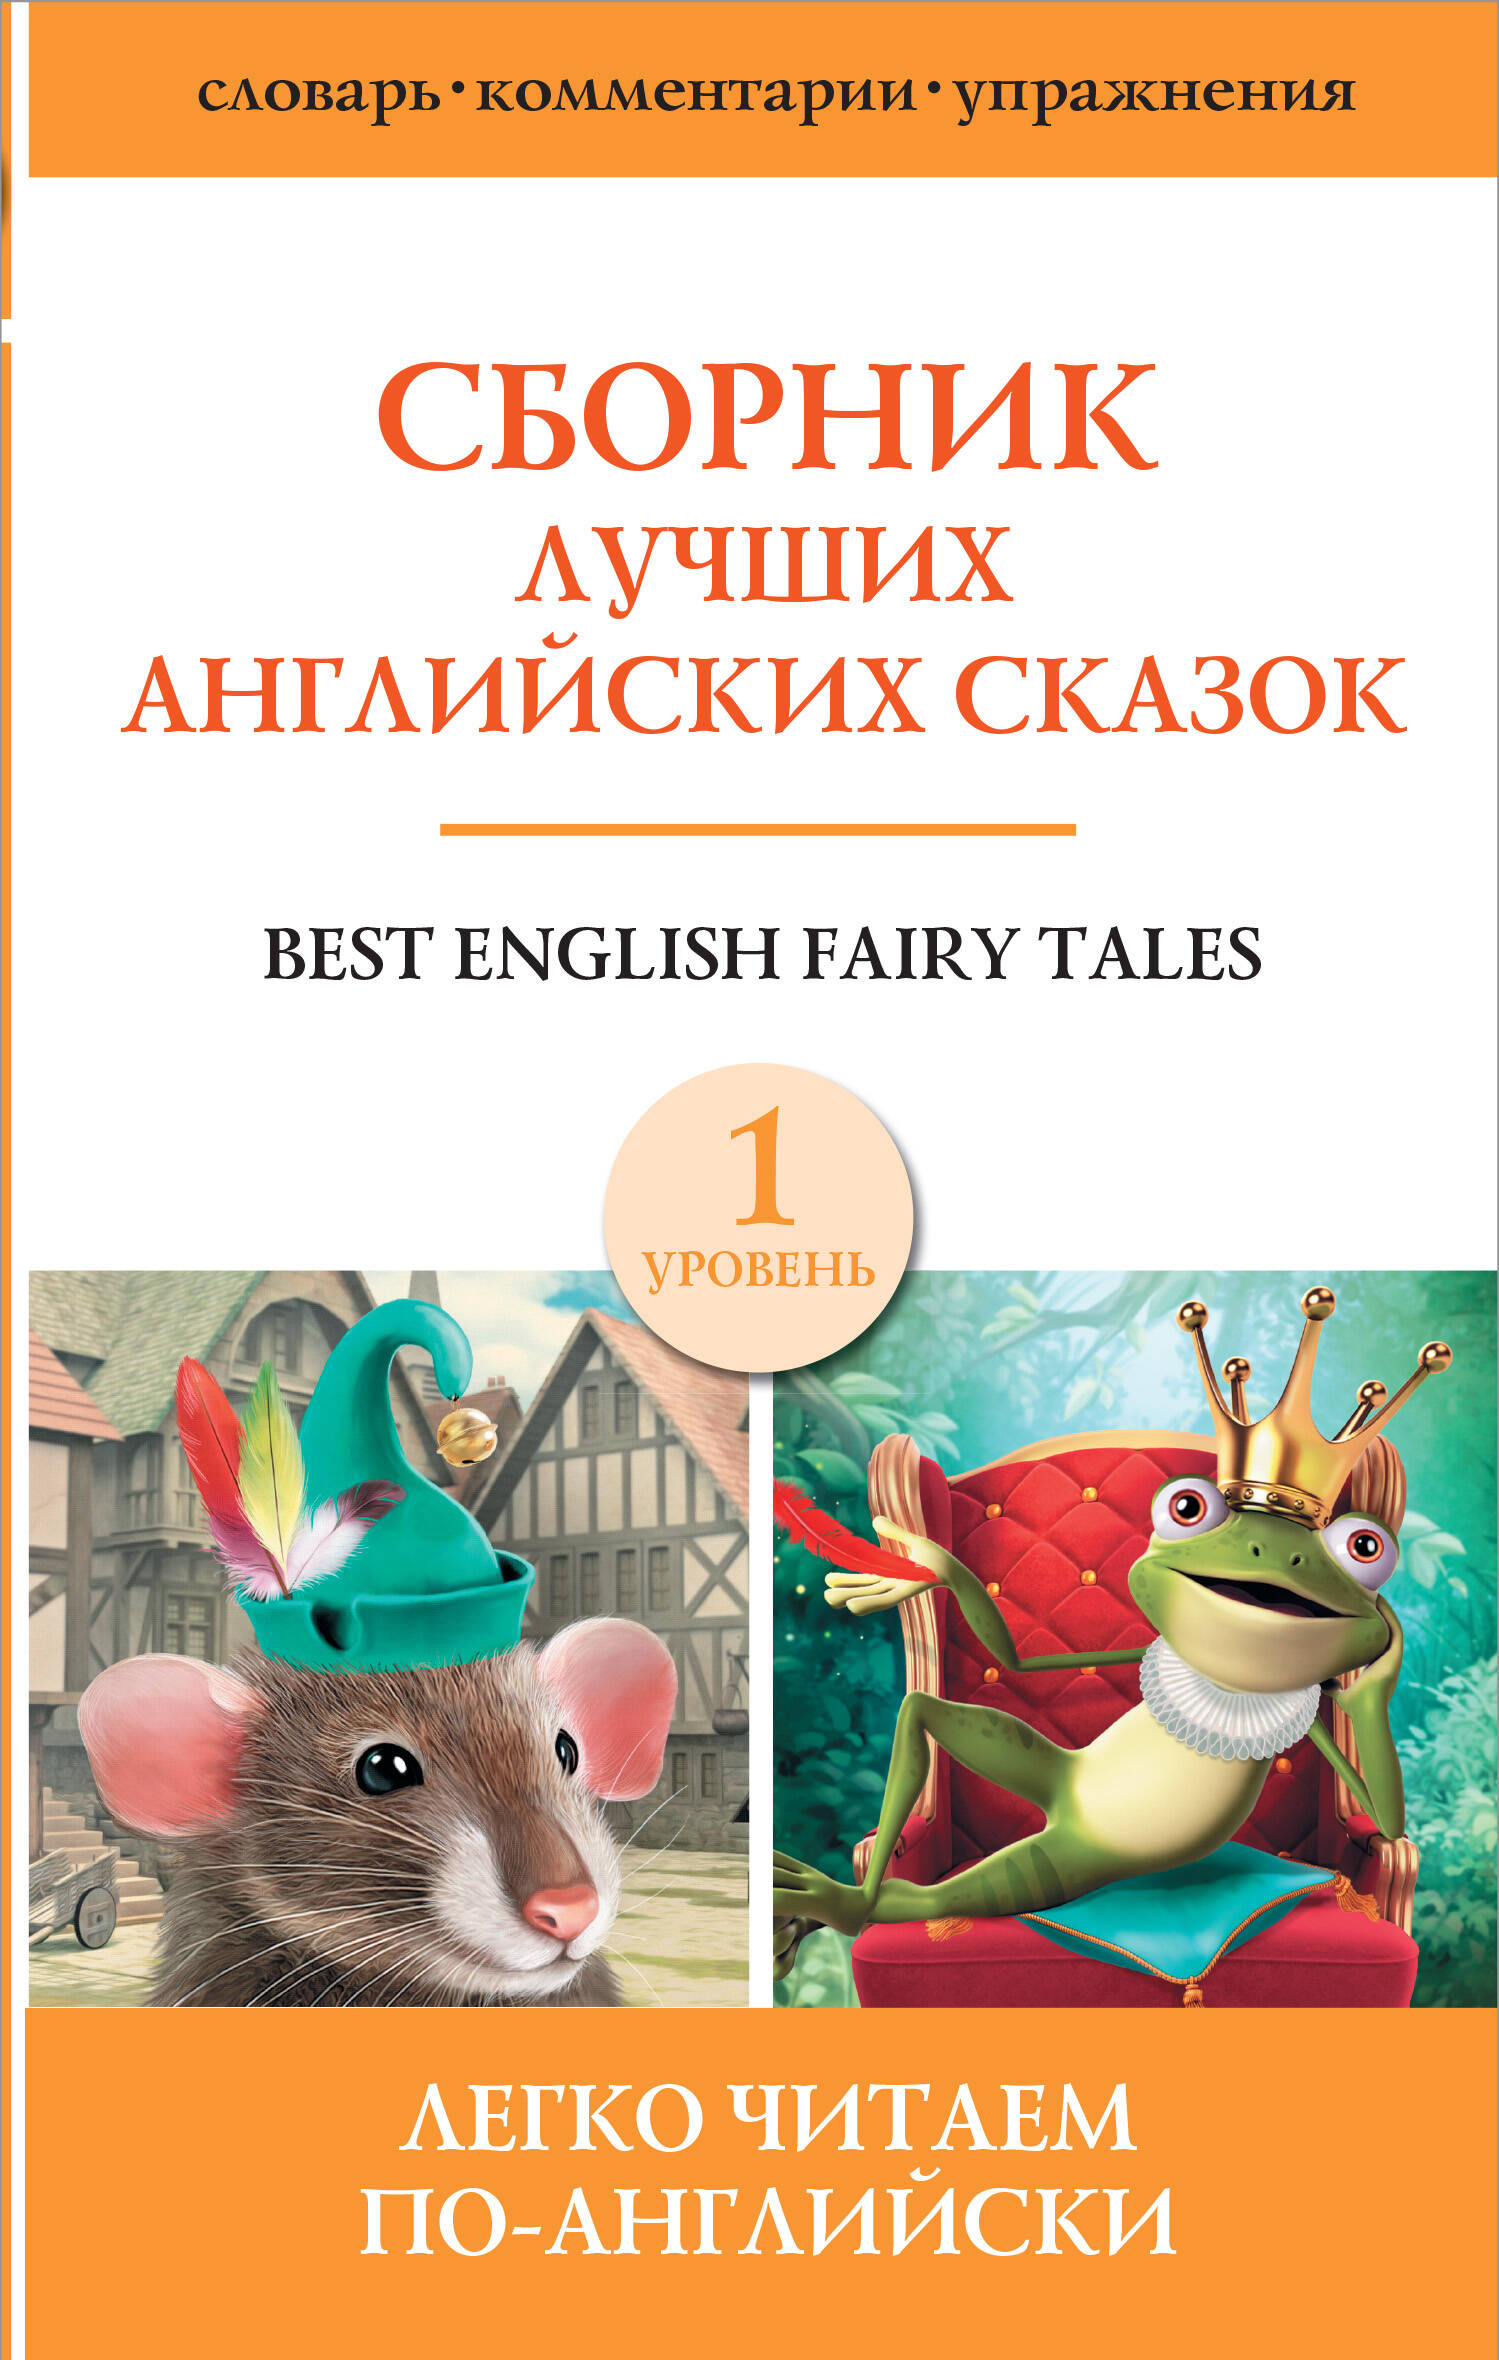 best english fairy tales сборник лучших английских сказок уровень 1 Best english fairy tales / Сборник лучших английских сказок. Уровень 1